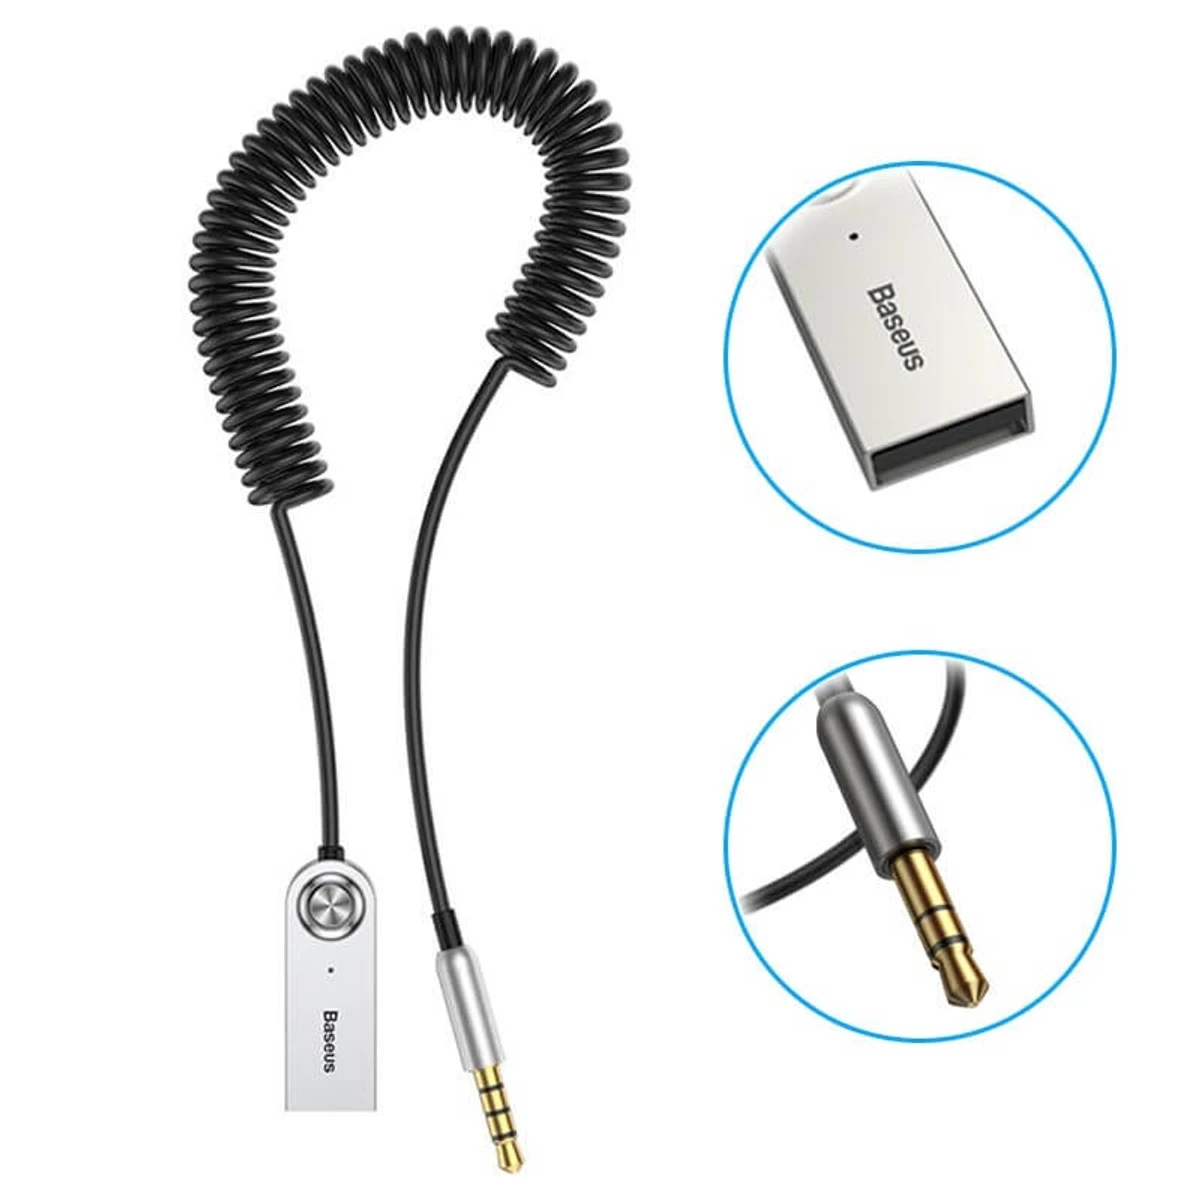 BASEUS BA01 Wireless Bluetooth Transmitter Stereo Audio Music Dongle Adapter Cable USB Plug